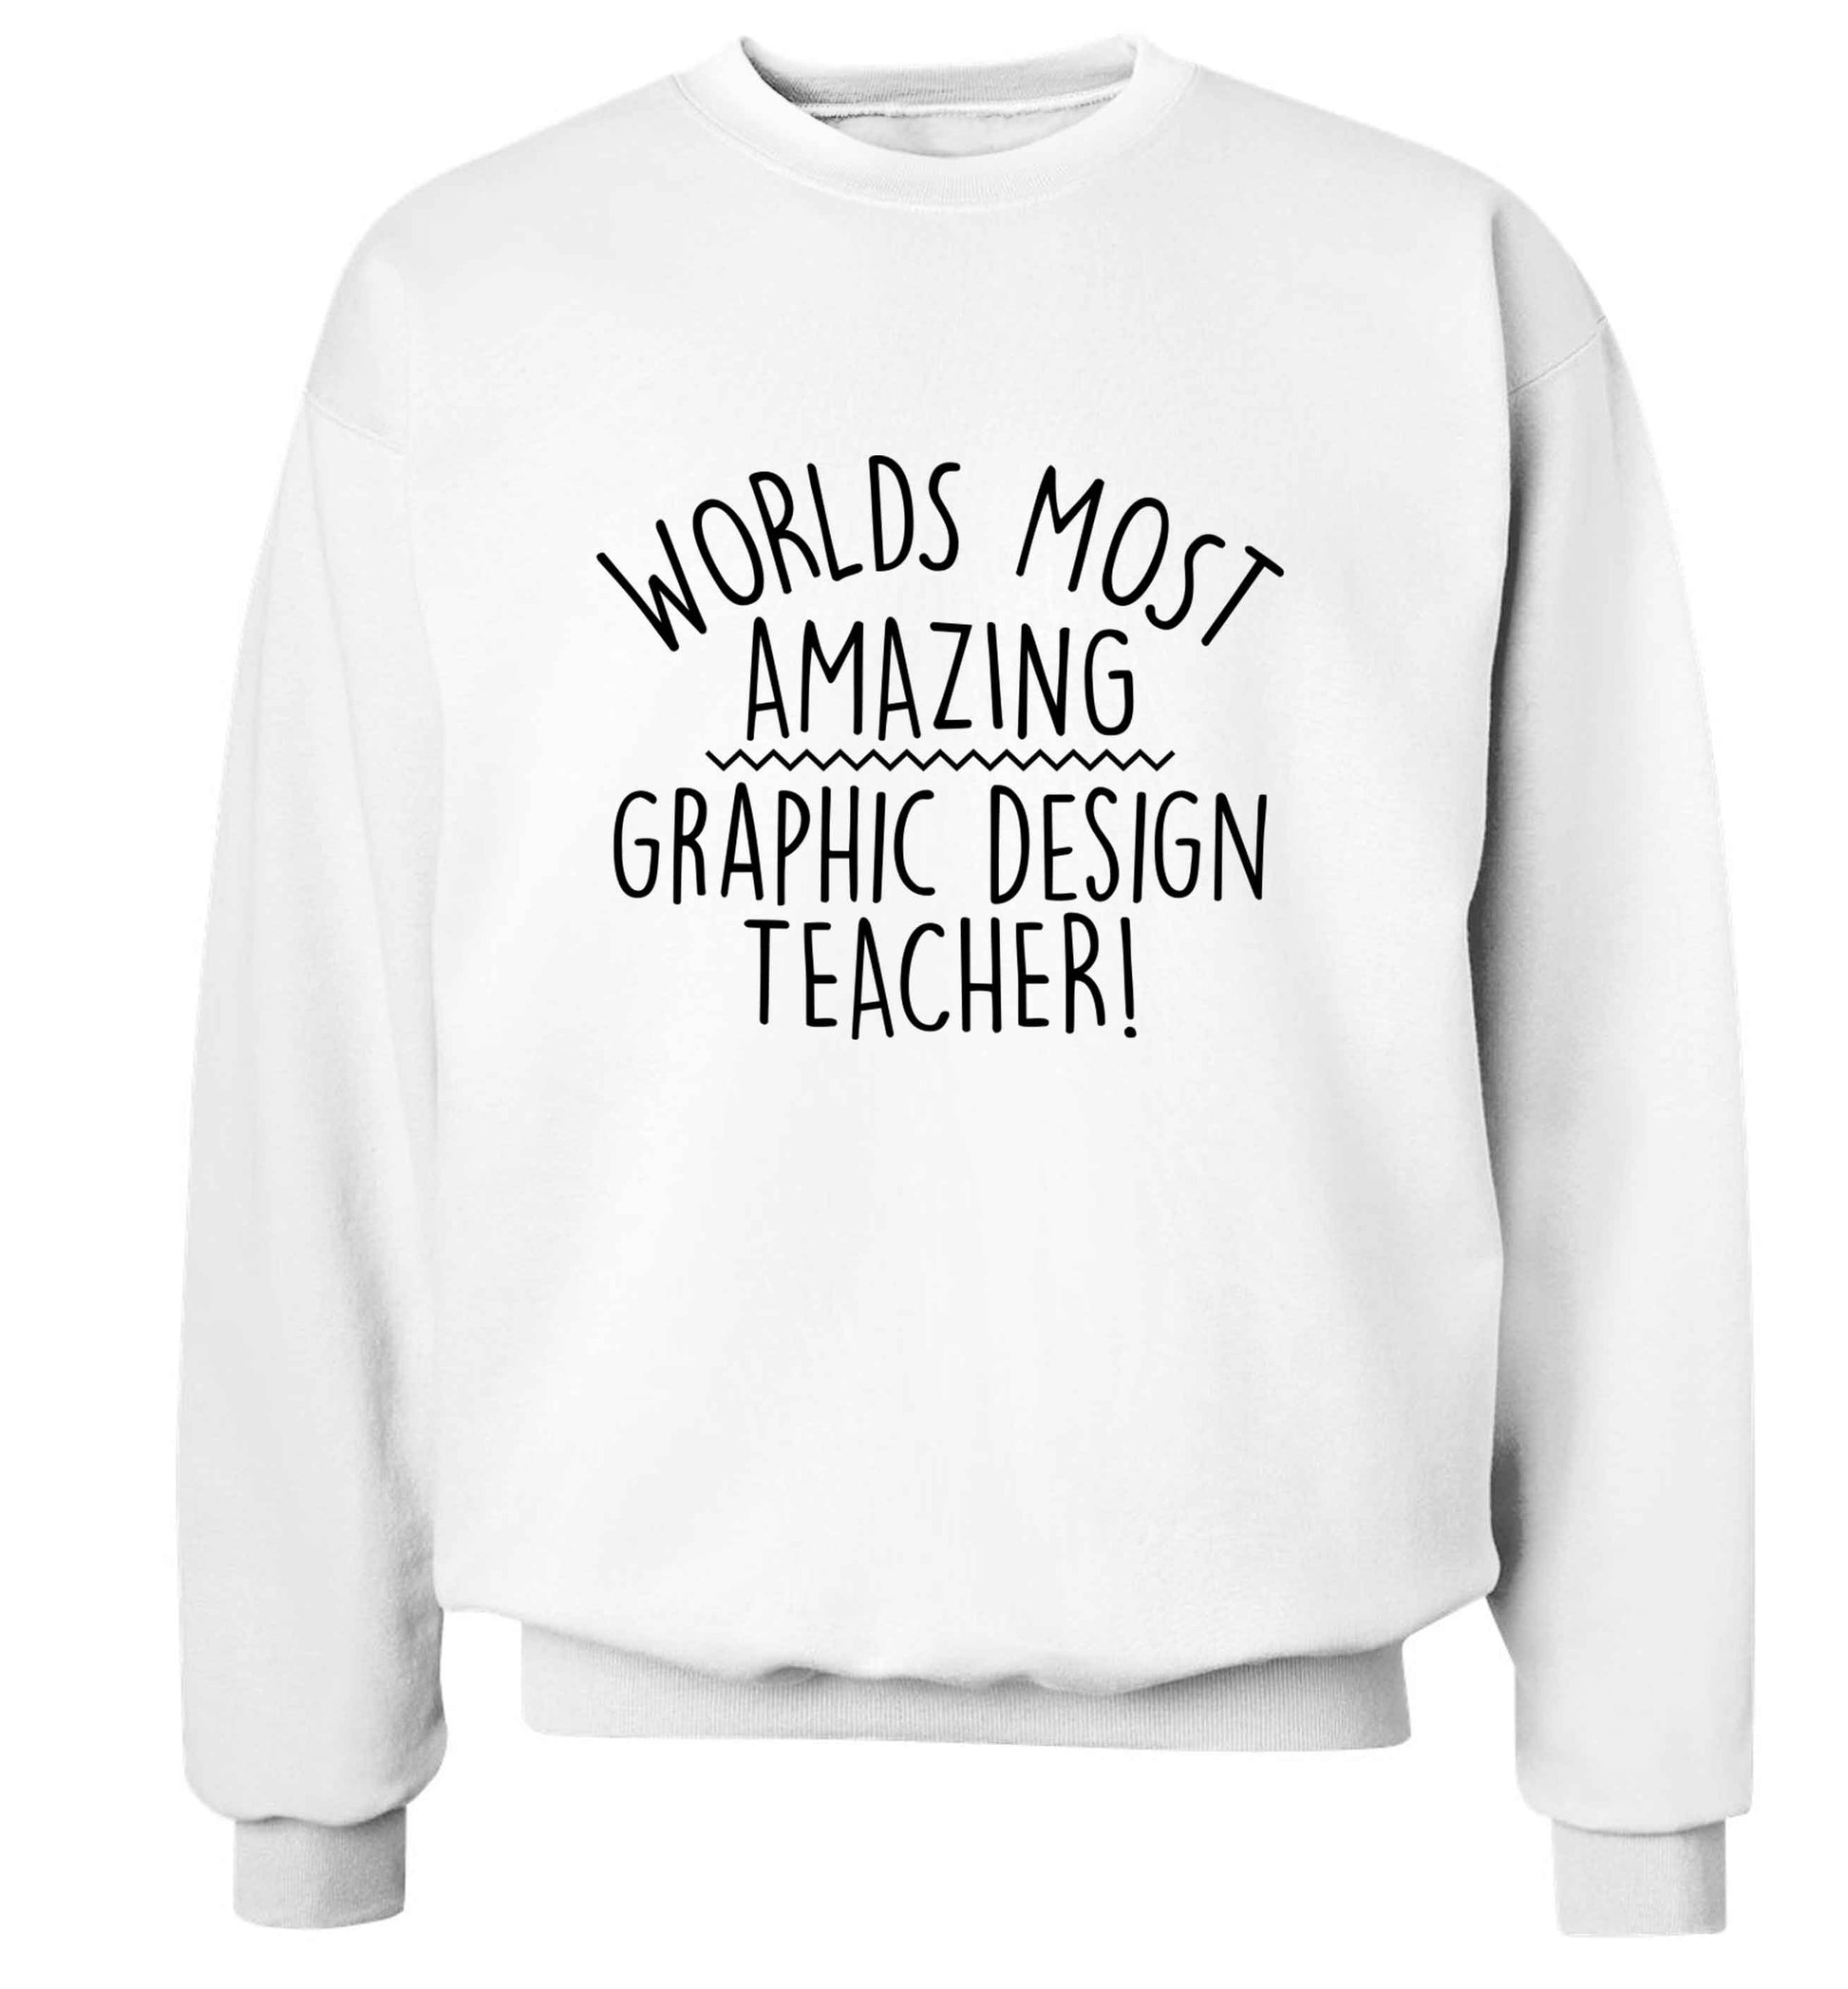 Worlds most amazing graphic design teacher adult's unisex white sweater 2XL